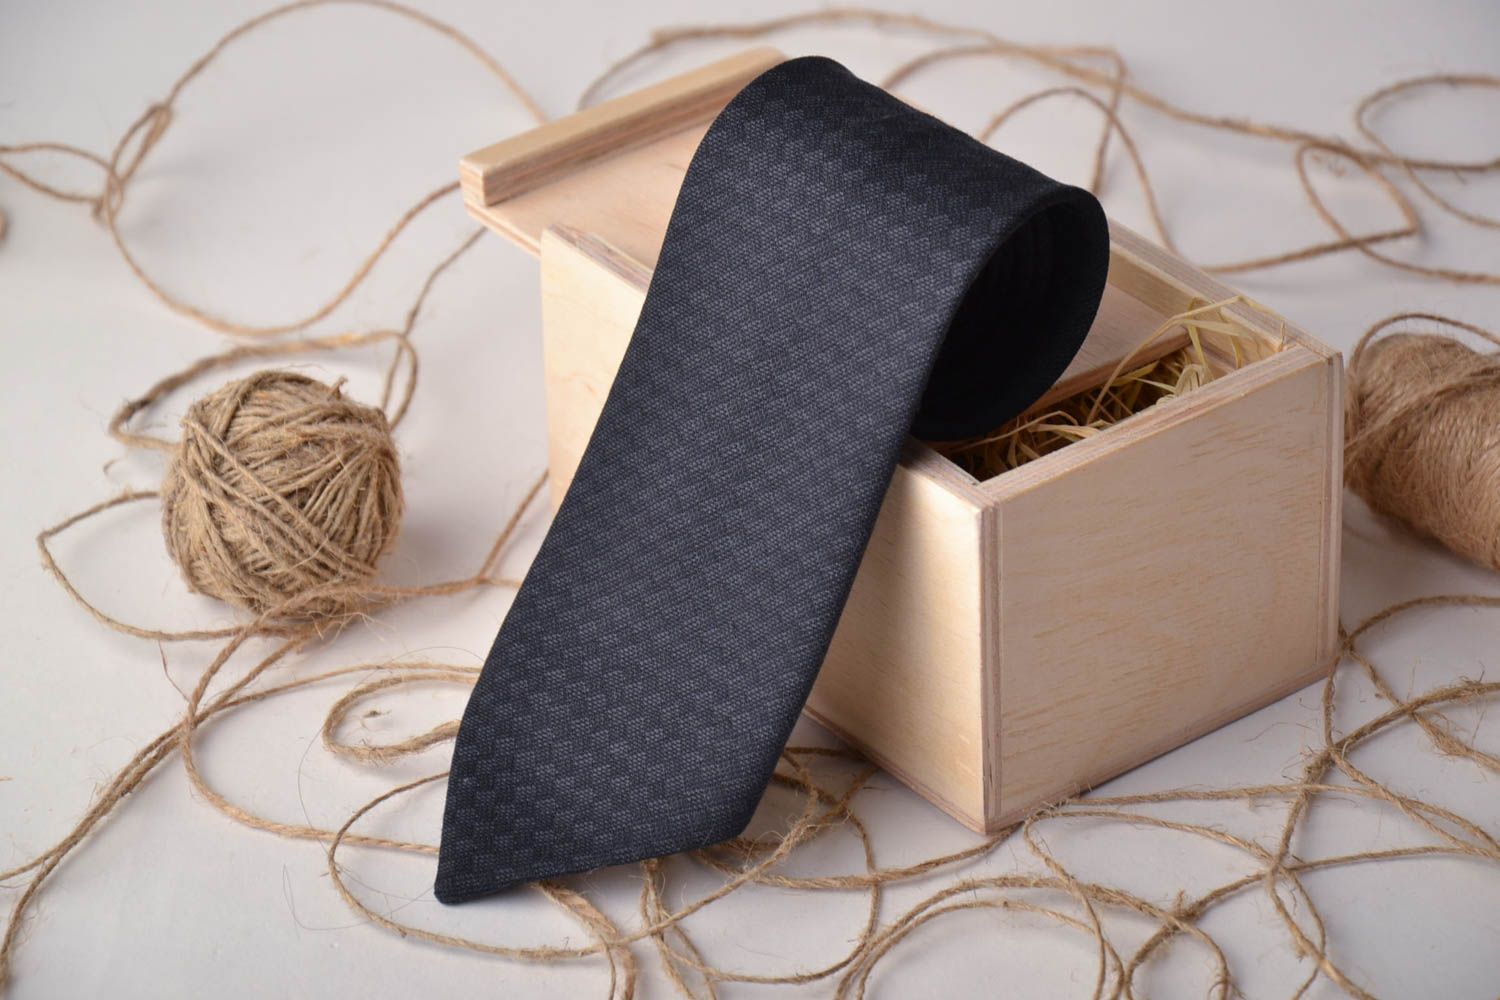 Cravate noire en tissu faite main photo 1